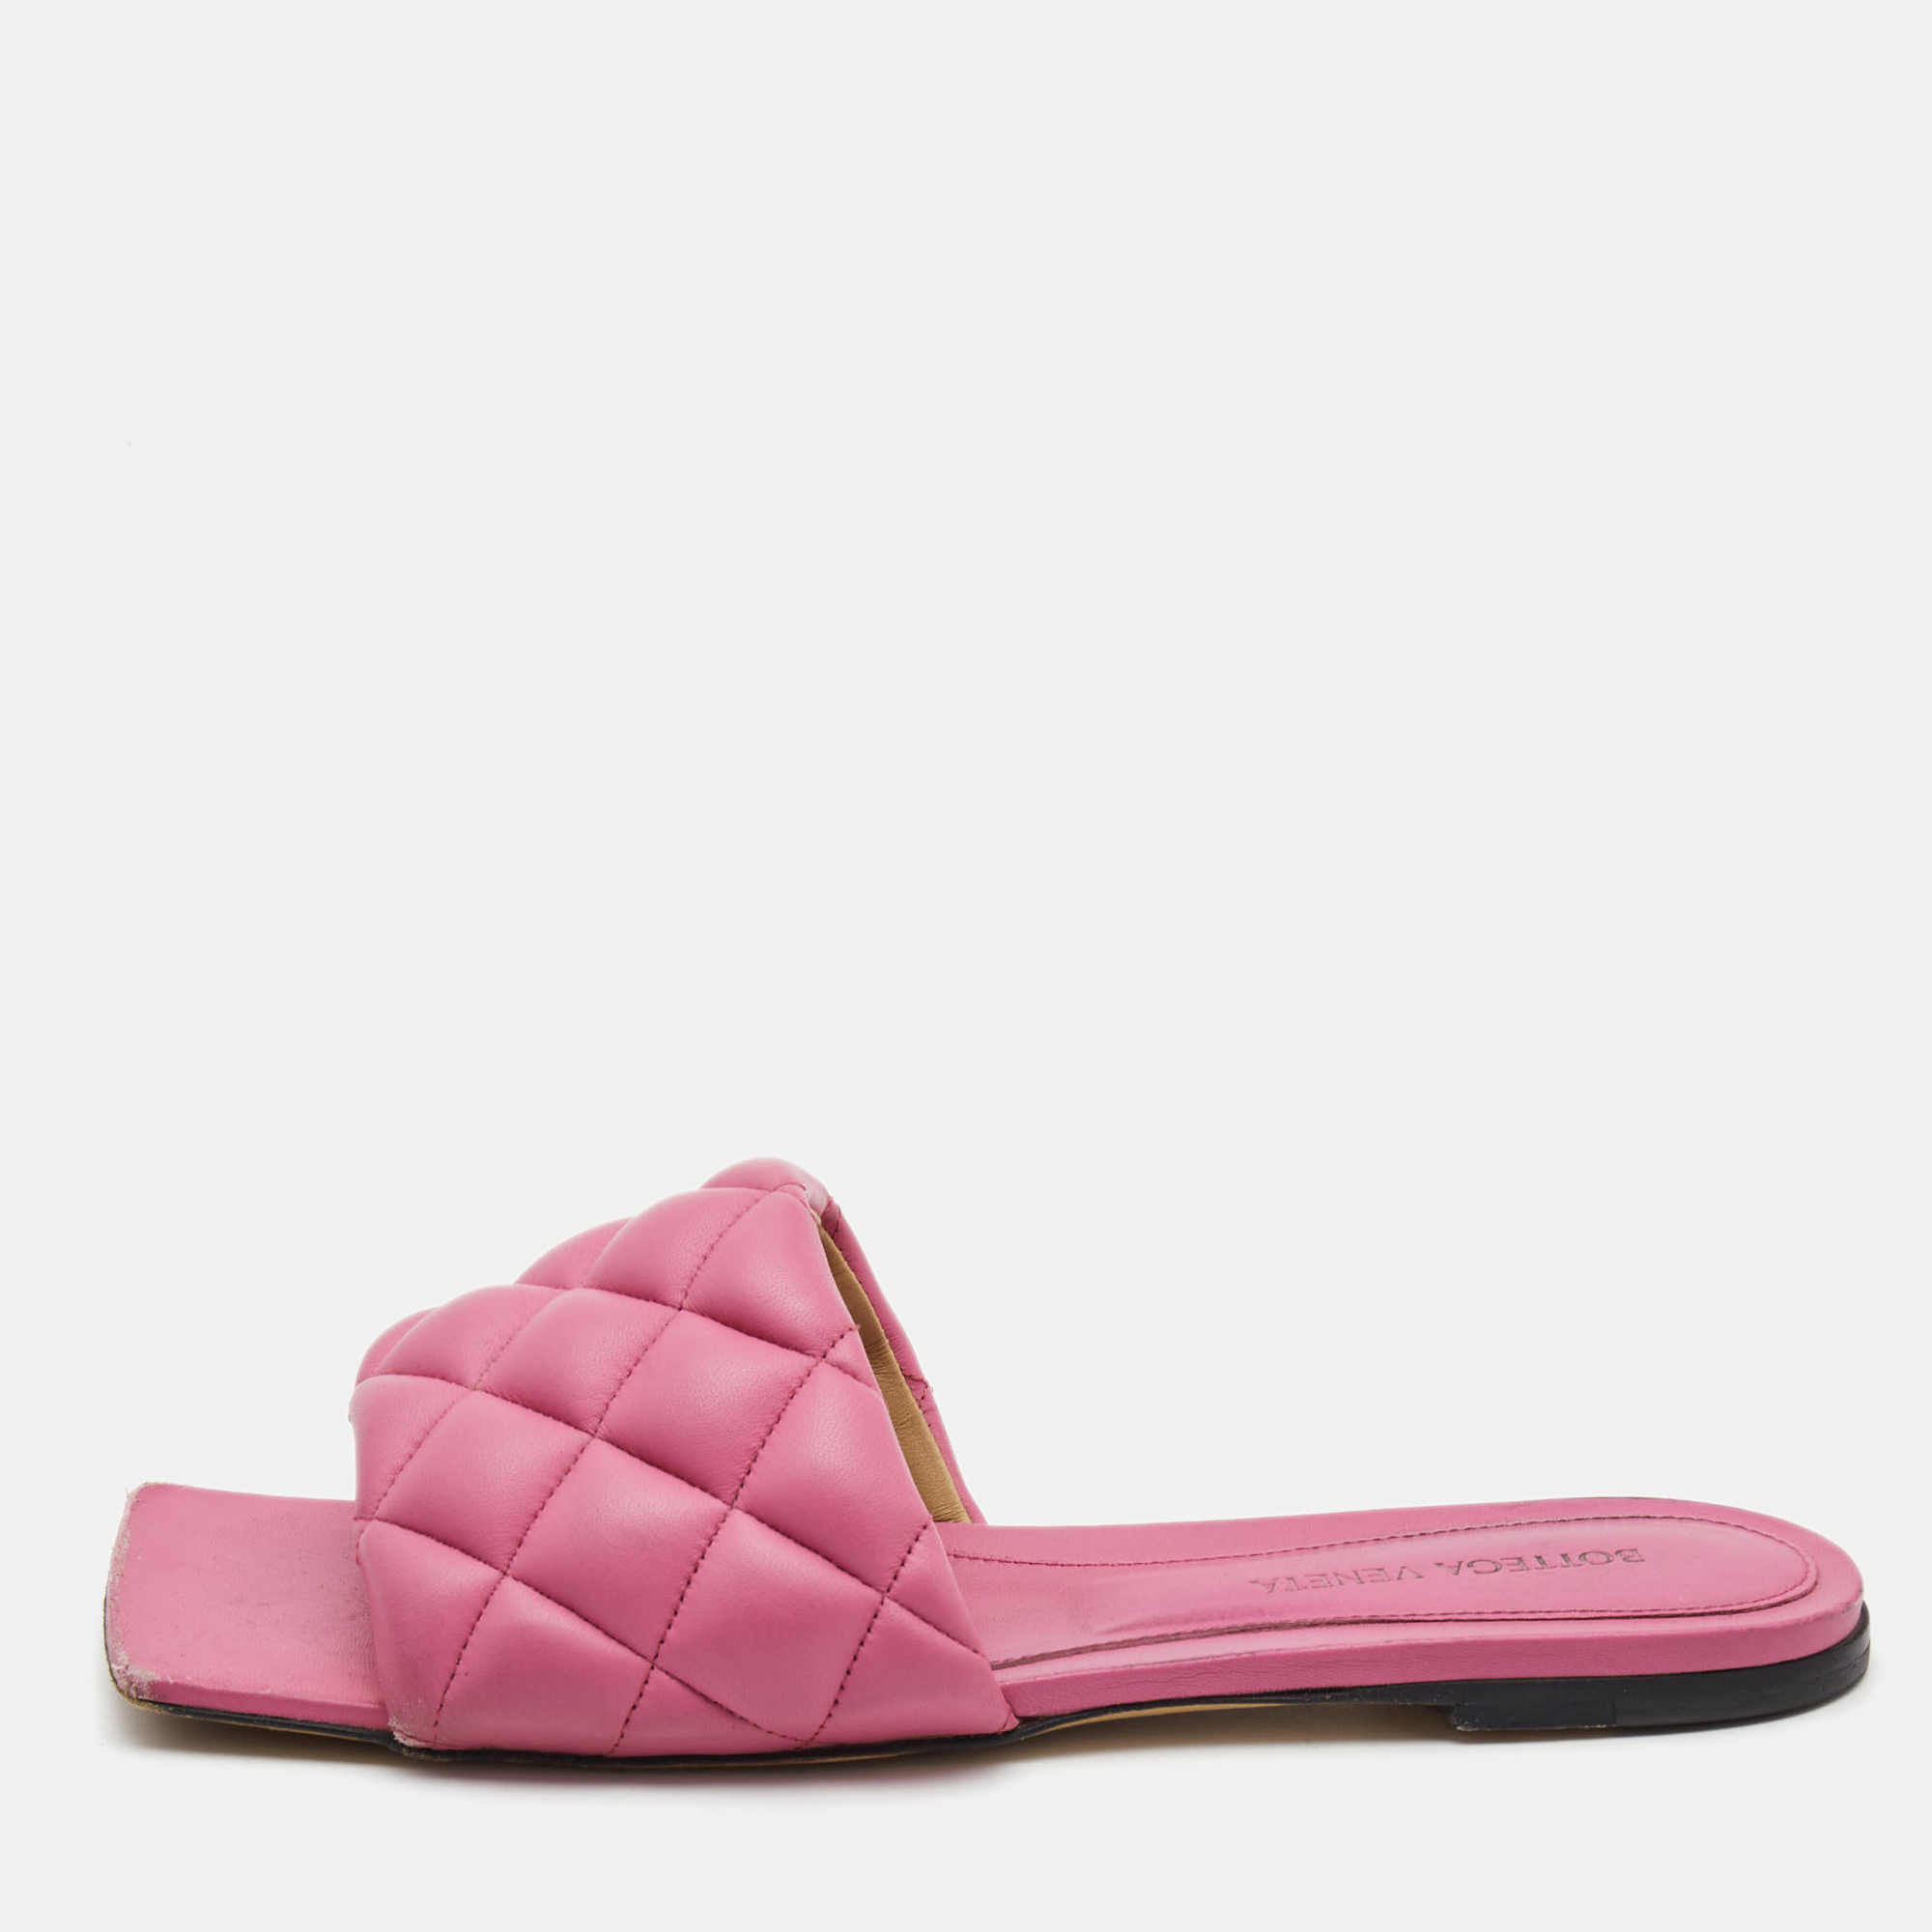 Pre-owned Bottega Veneta Pink Quilted Leather Flat Slides Size 37.5